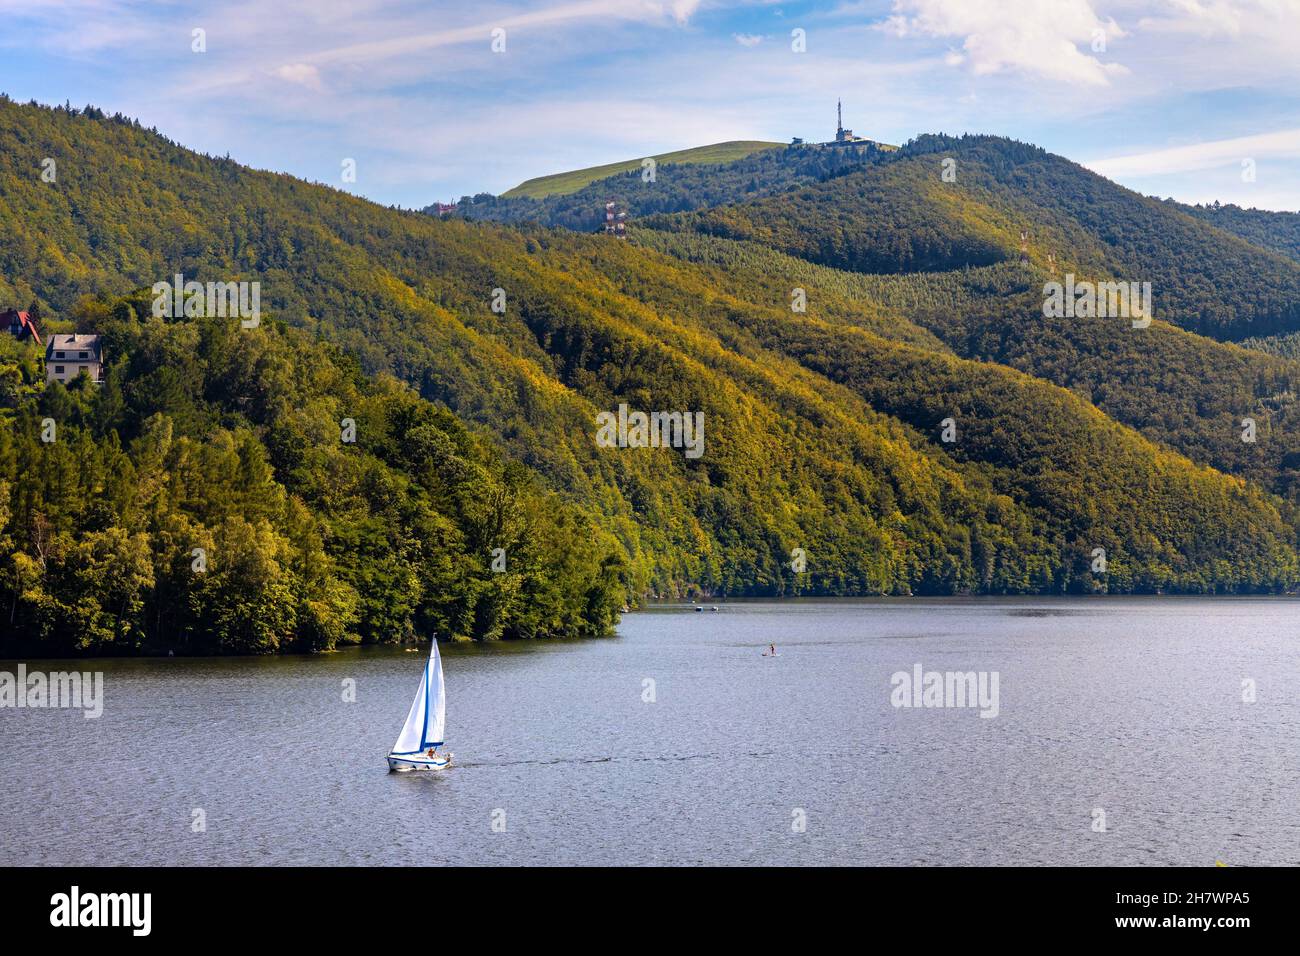 Zywiec, Poland - August 30, 2020: Panoramic view of Miedzybrodzkie Lake and Beskidy Mountains with Gora Zar mountain in Silesia region Stock Photo